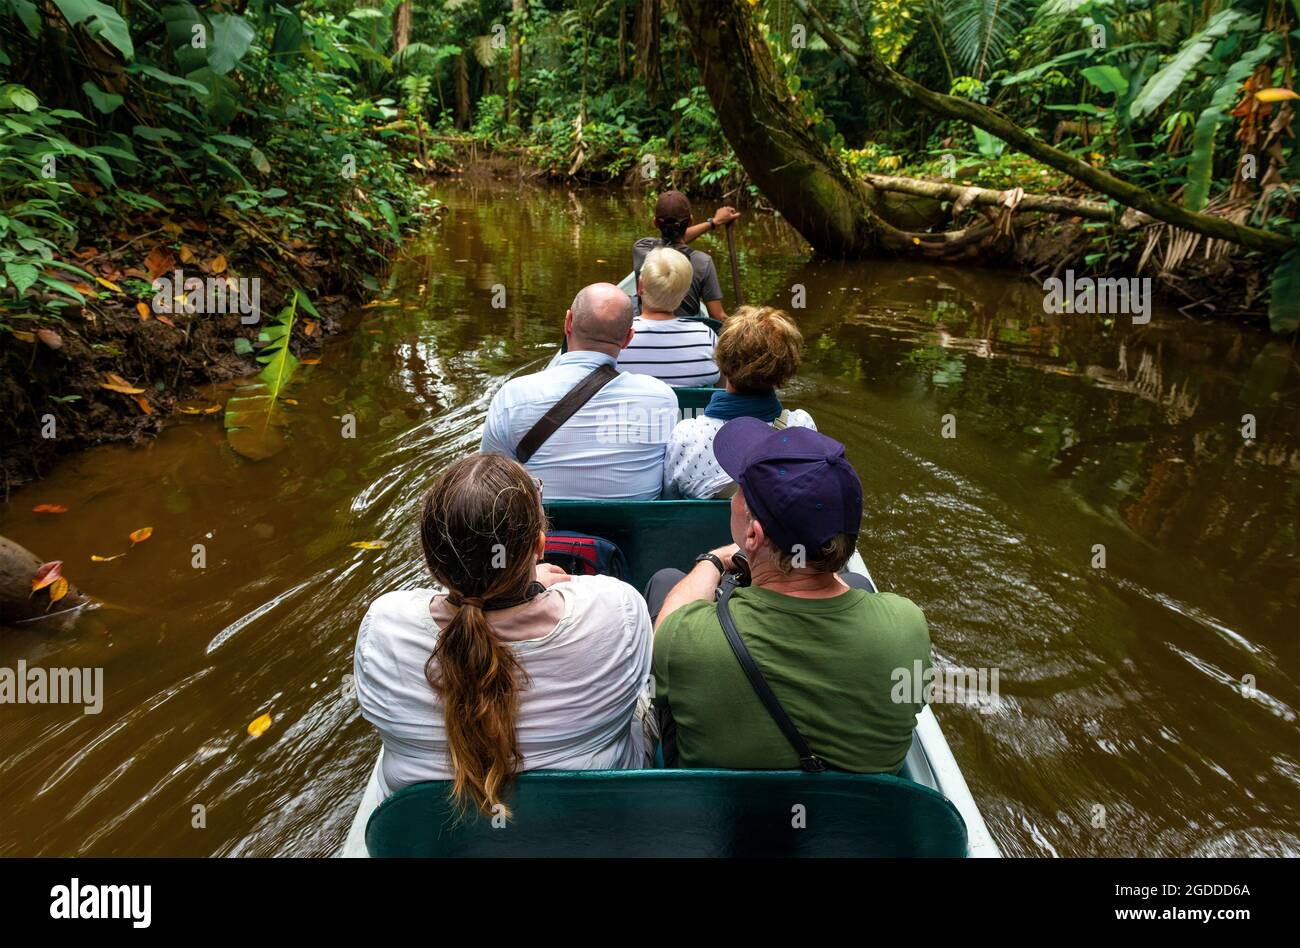 Kanutransport-Touristenexkursion entlang der Flüsse des Amazonas-Regenwald-Flussbeckens, Yasuni-Nationalpark, Ecuador. Stockfoto